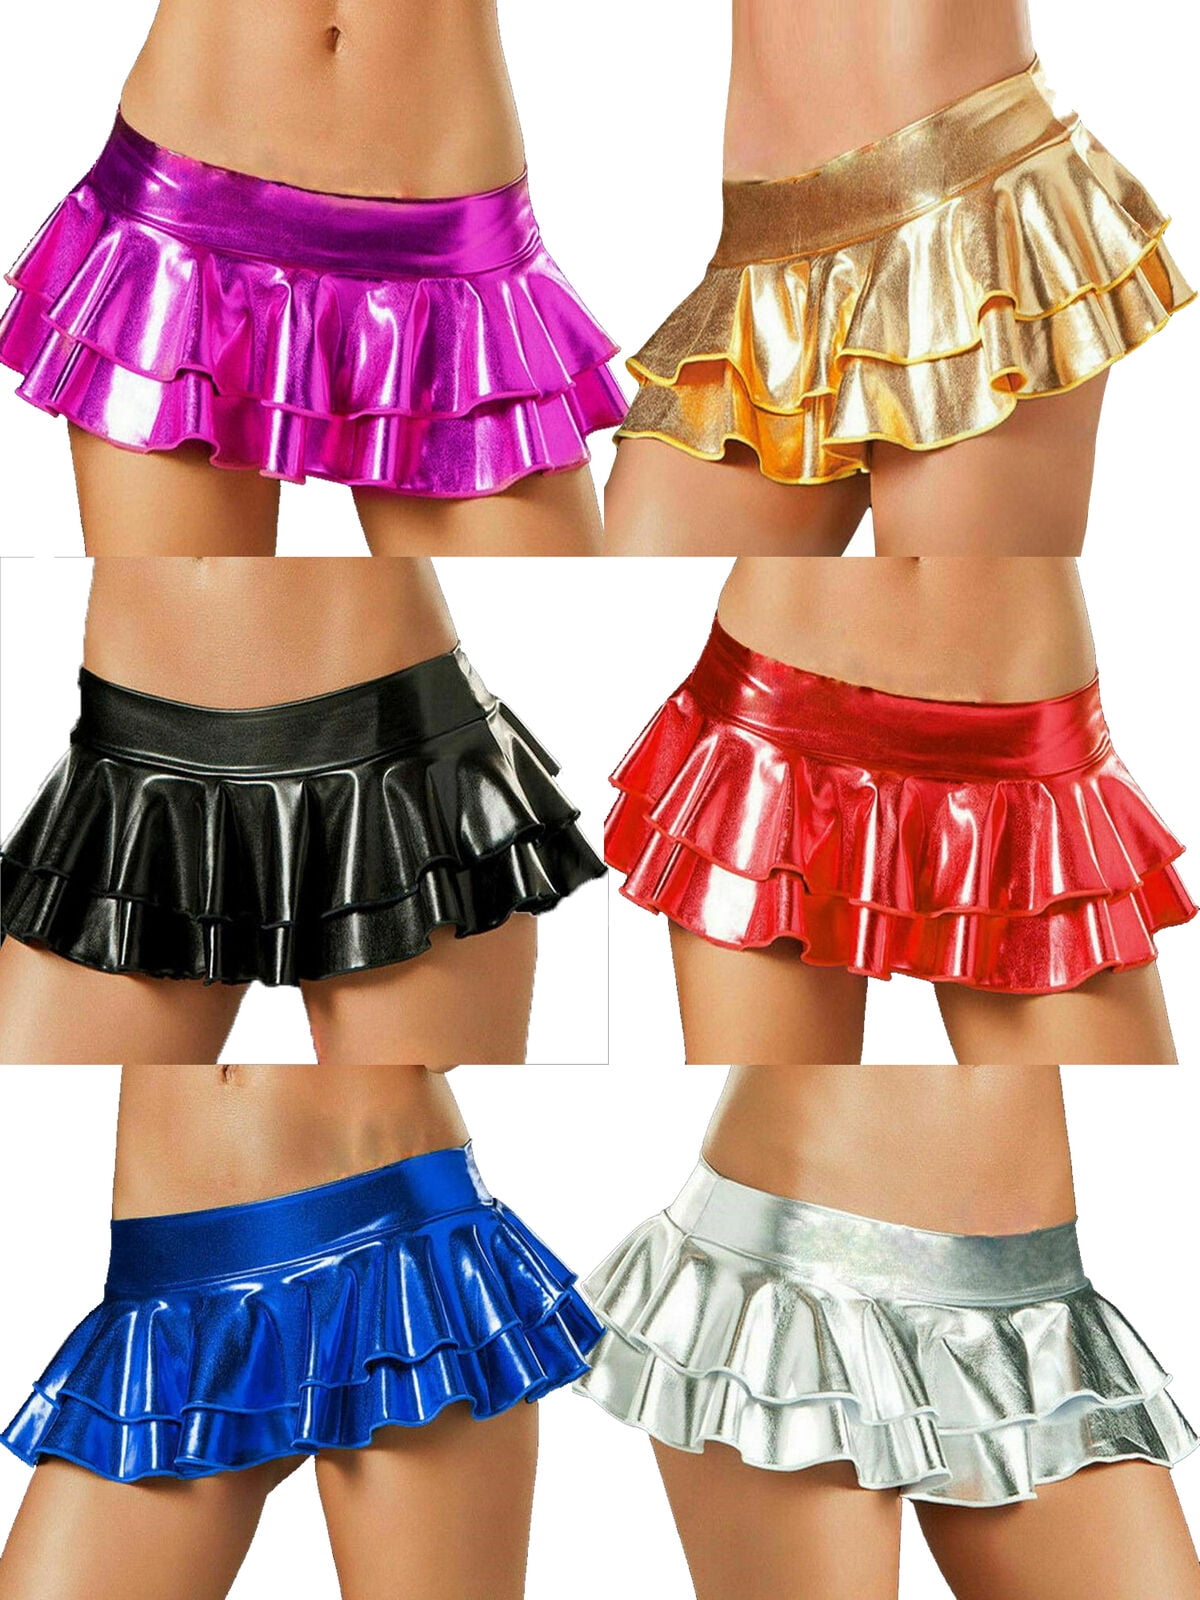 Luethbiezx Women Lingerie Micro Mini Dress Bodycon Dance Club Skirt Metallic Pu Leather 